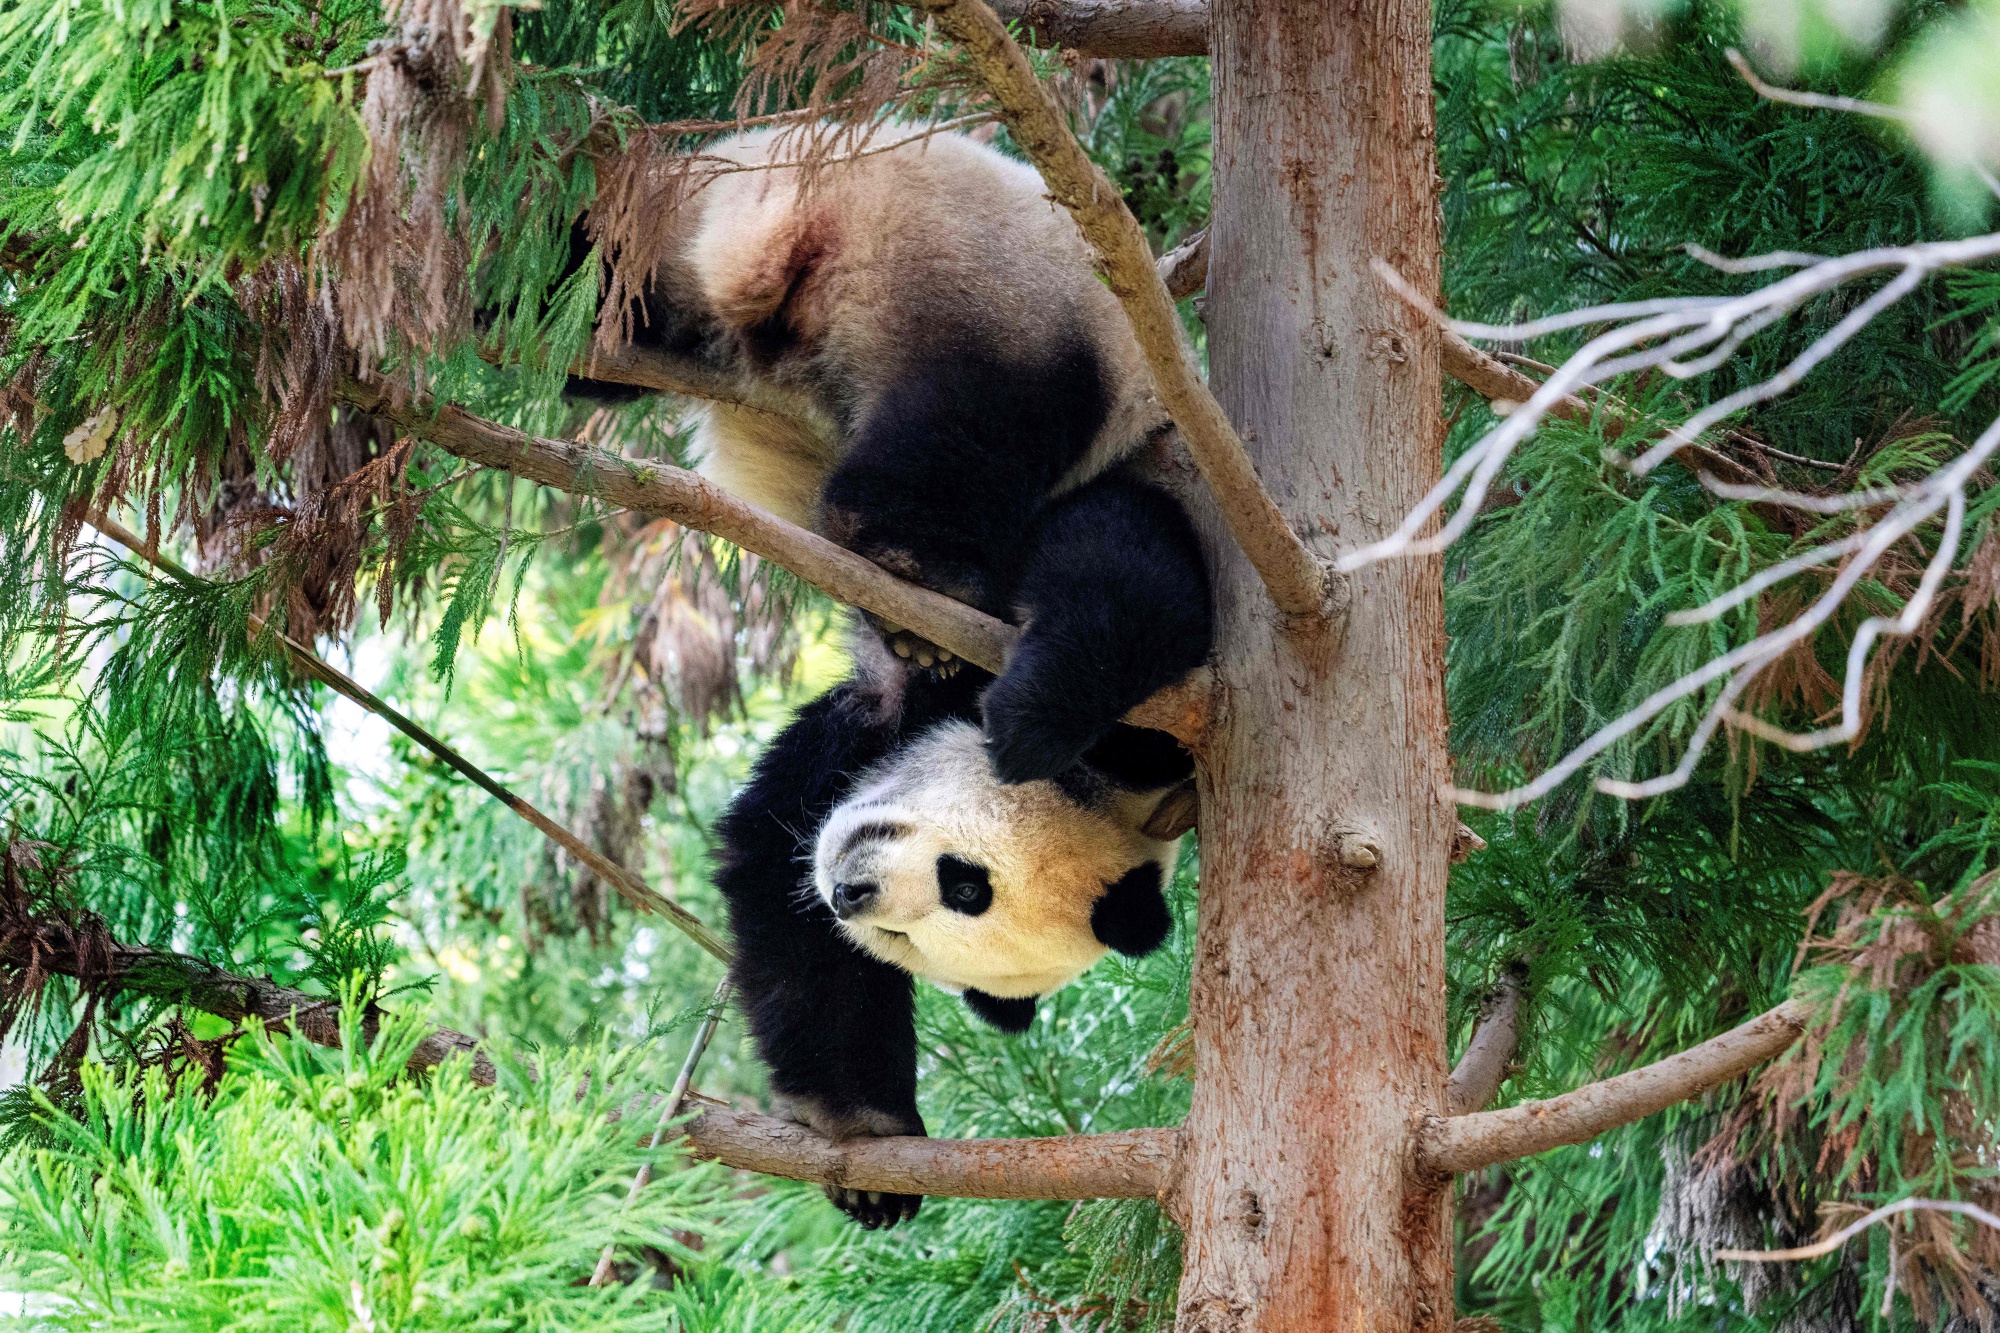 Pandas return to China as loan agreements with U.S., U.K. zoos end